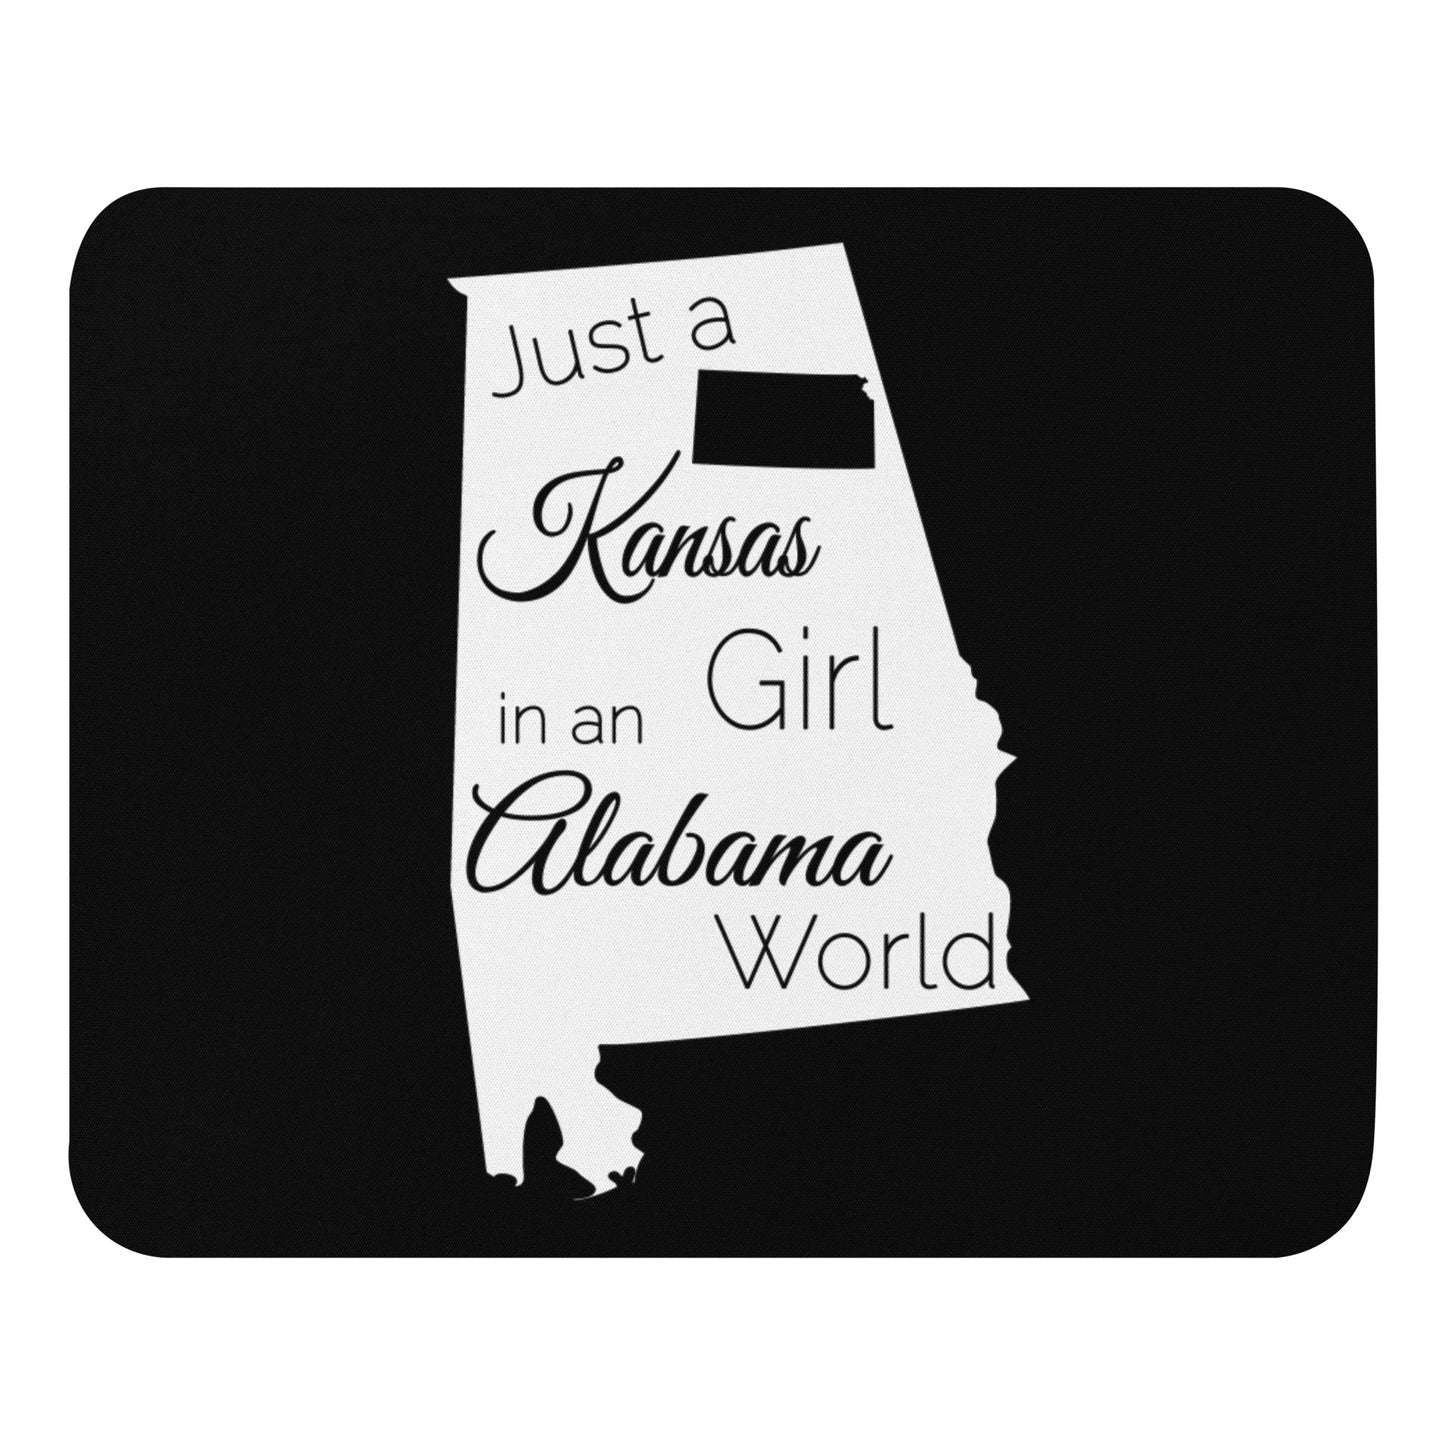 Just a Kansas Girl in an Alabama World Mouse pad